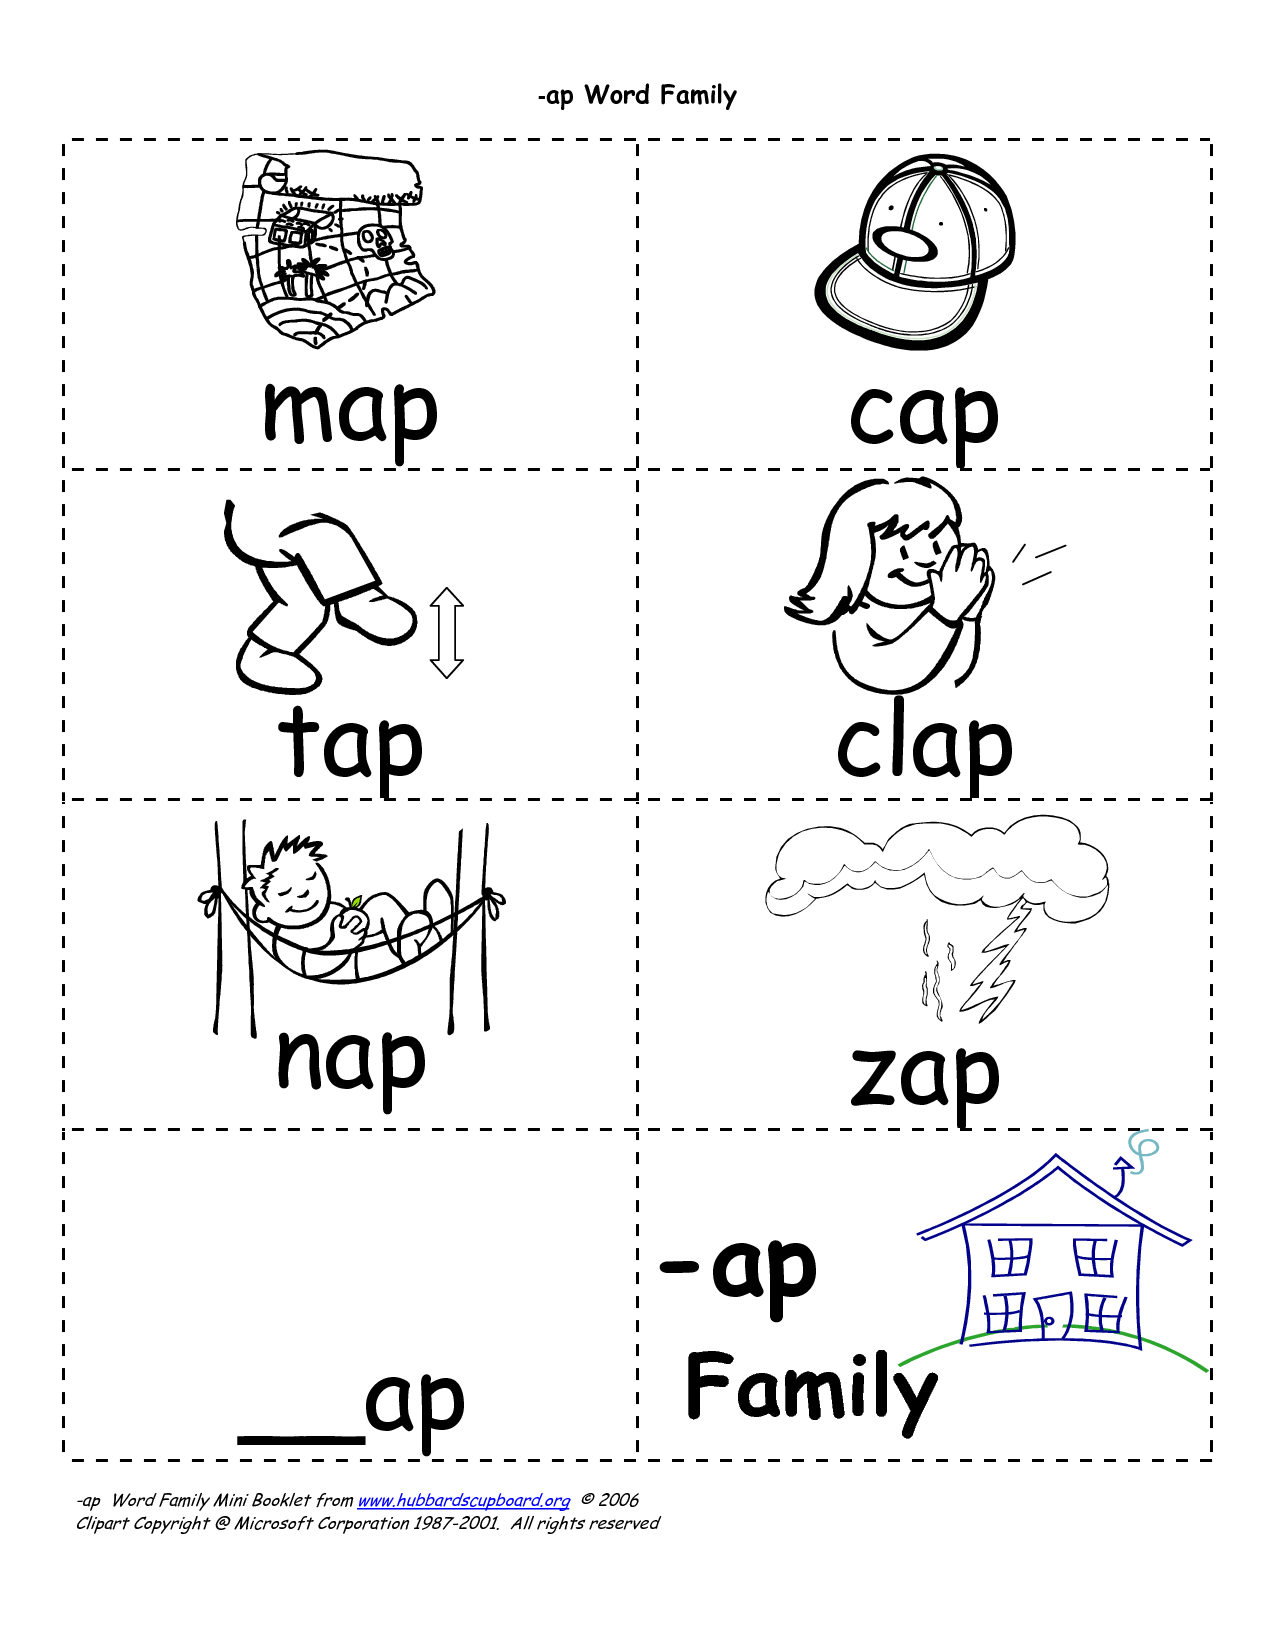 AP Word Family Worksheets Printable Image